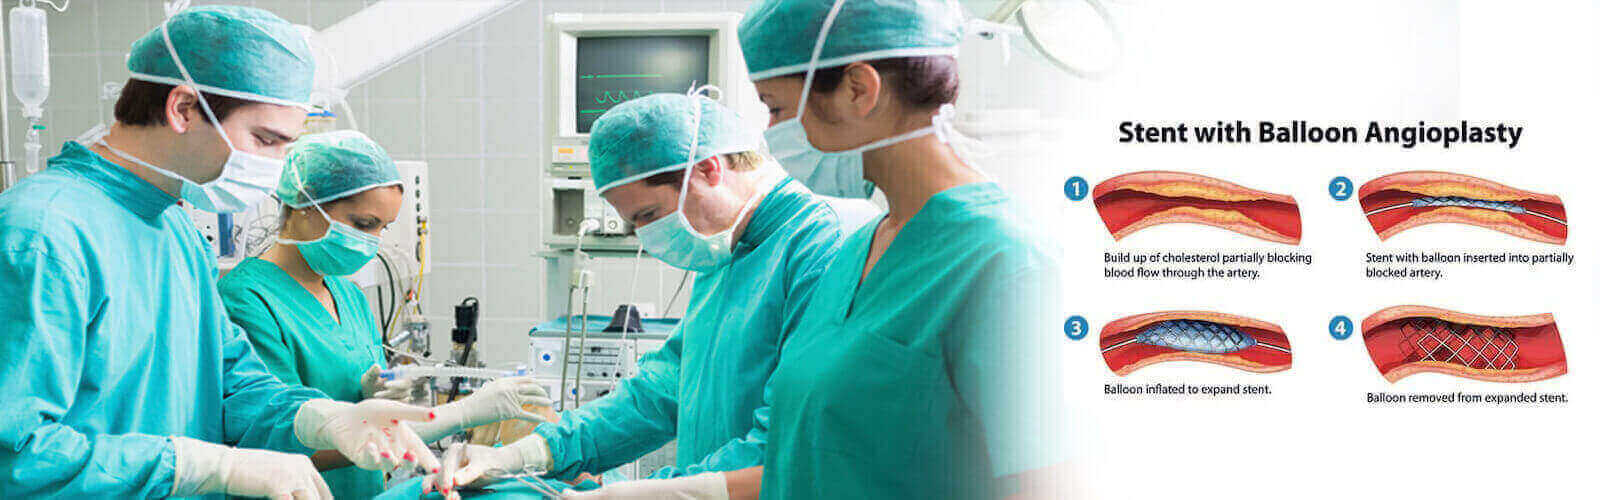 Angioplasty Surgery in Turkey